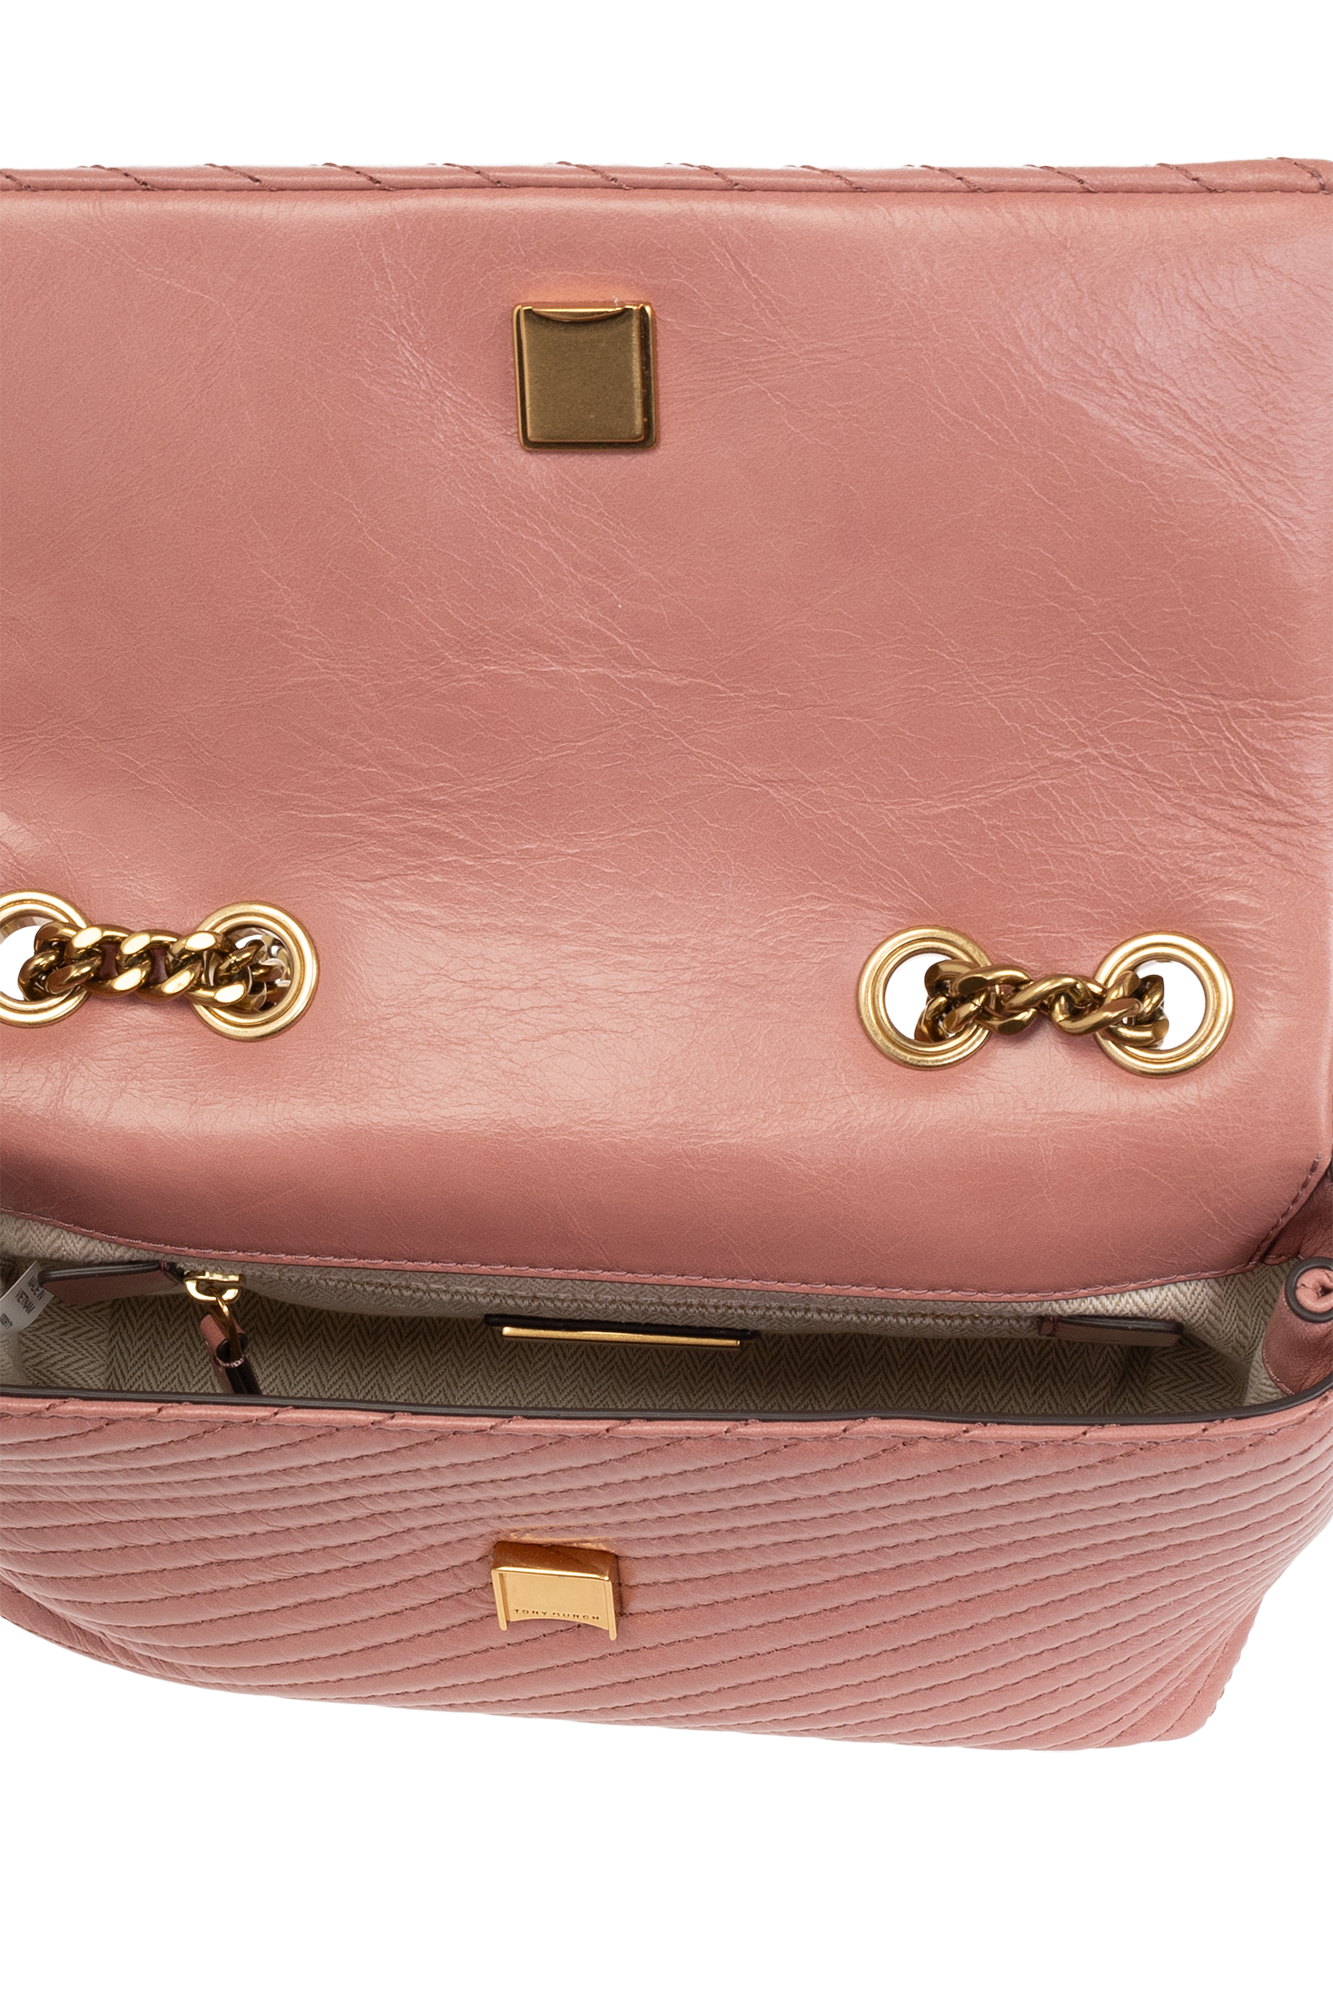 Tory Burch Pink Handbags